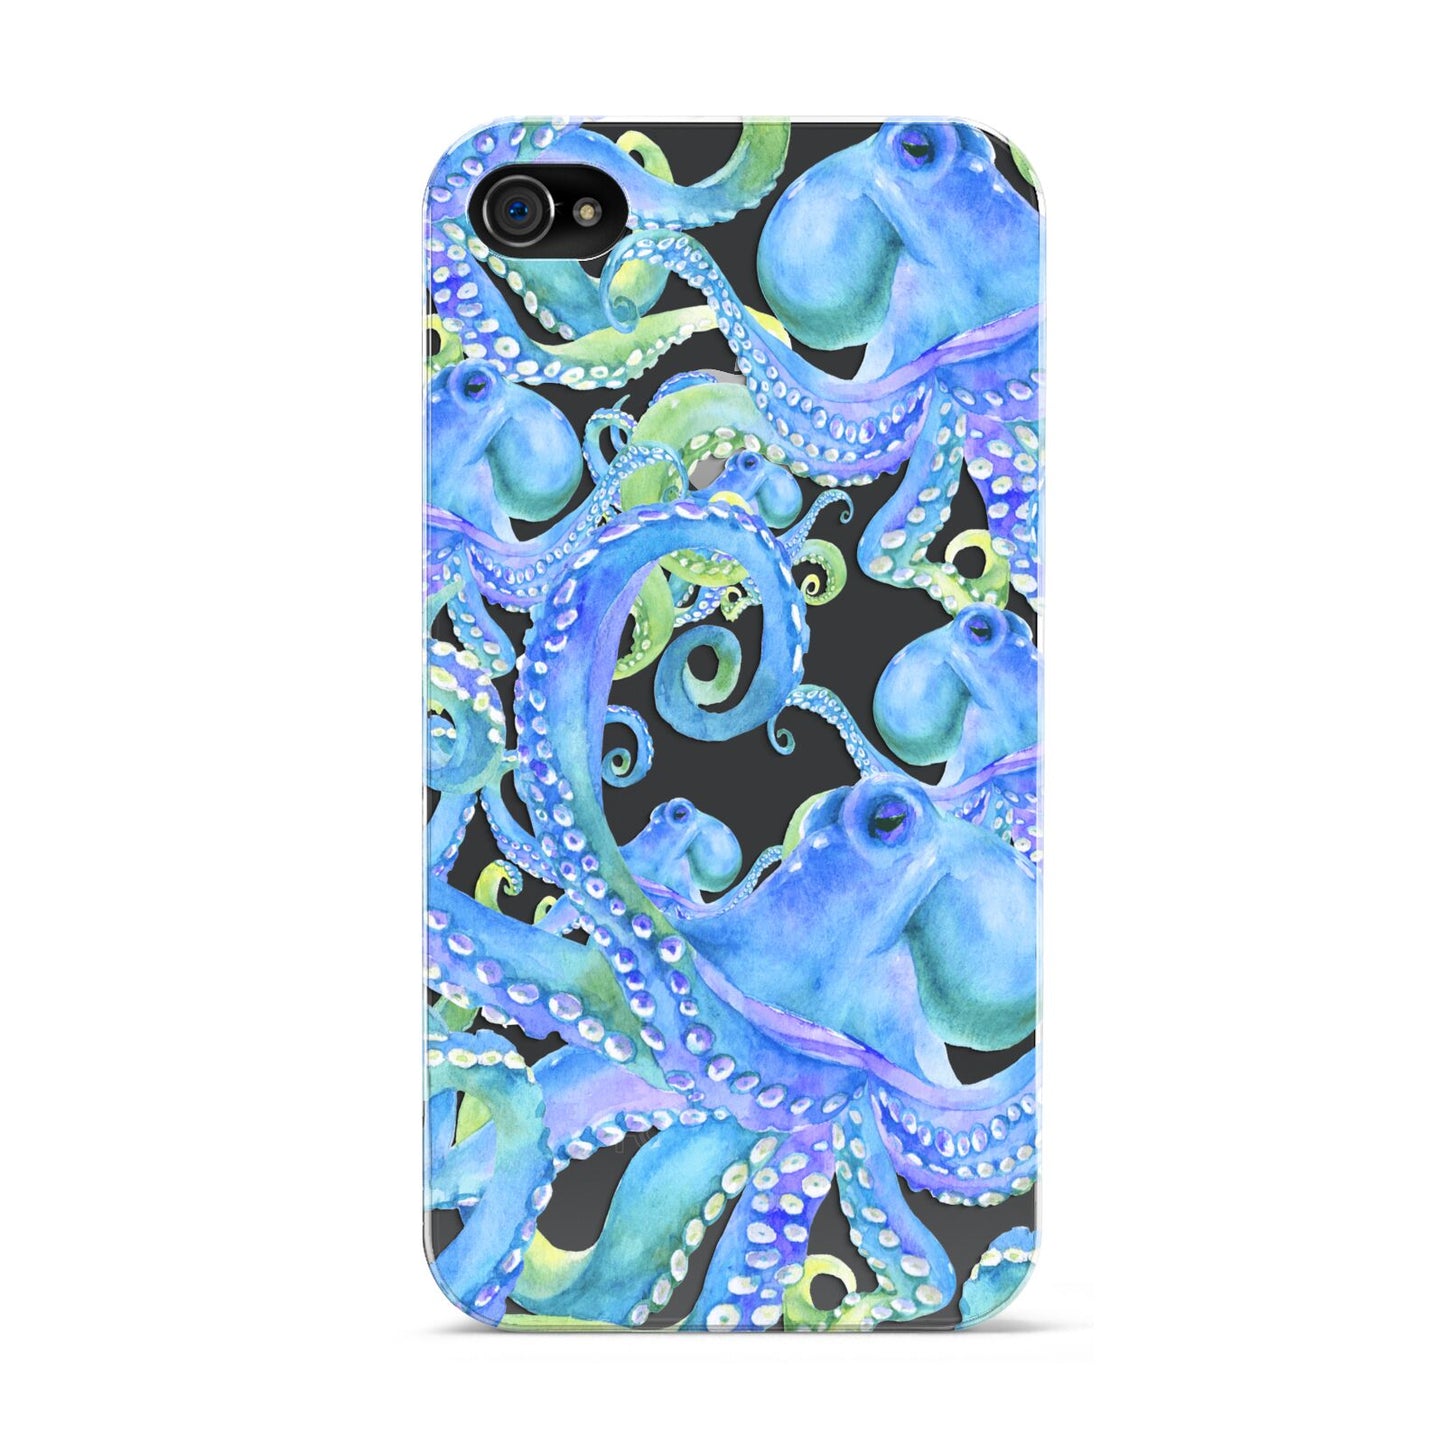 Octopus Apple iPhone 4s Case